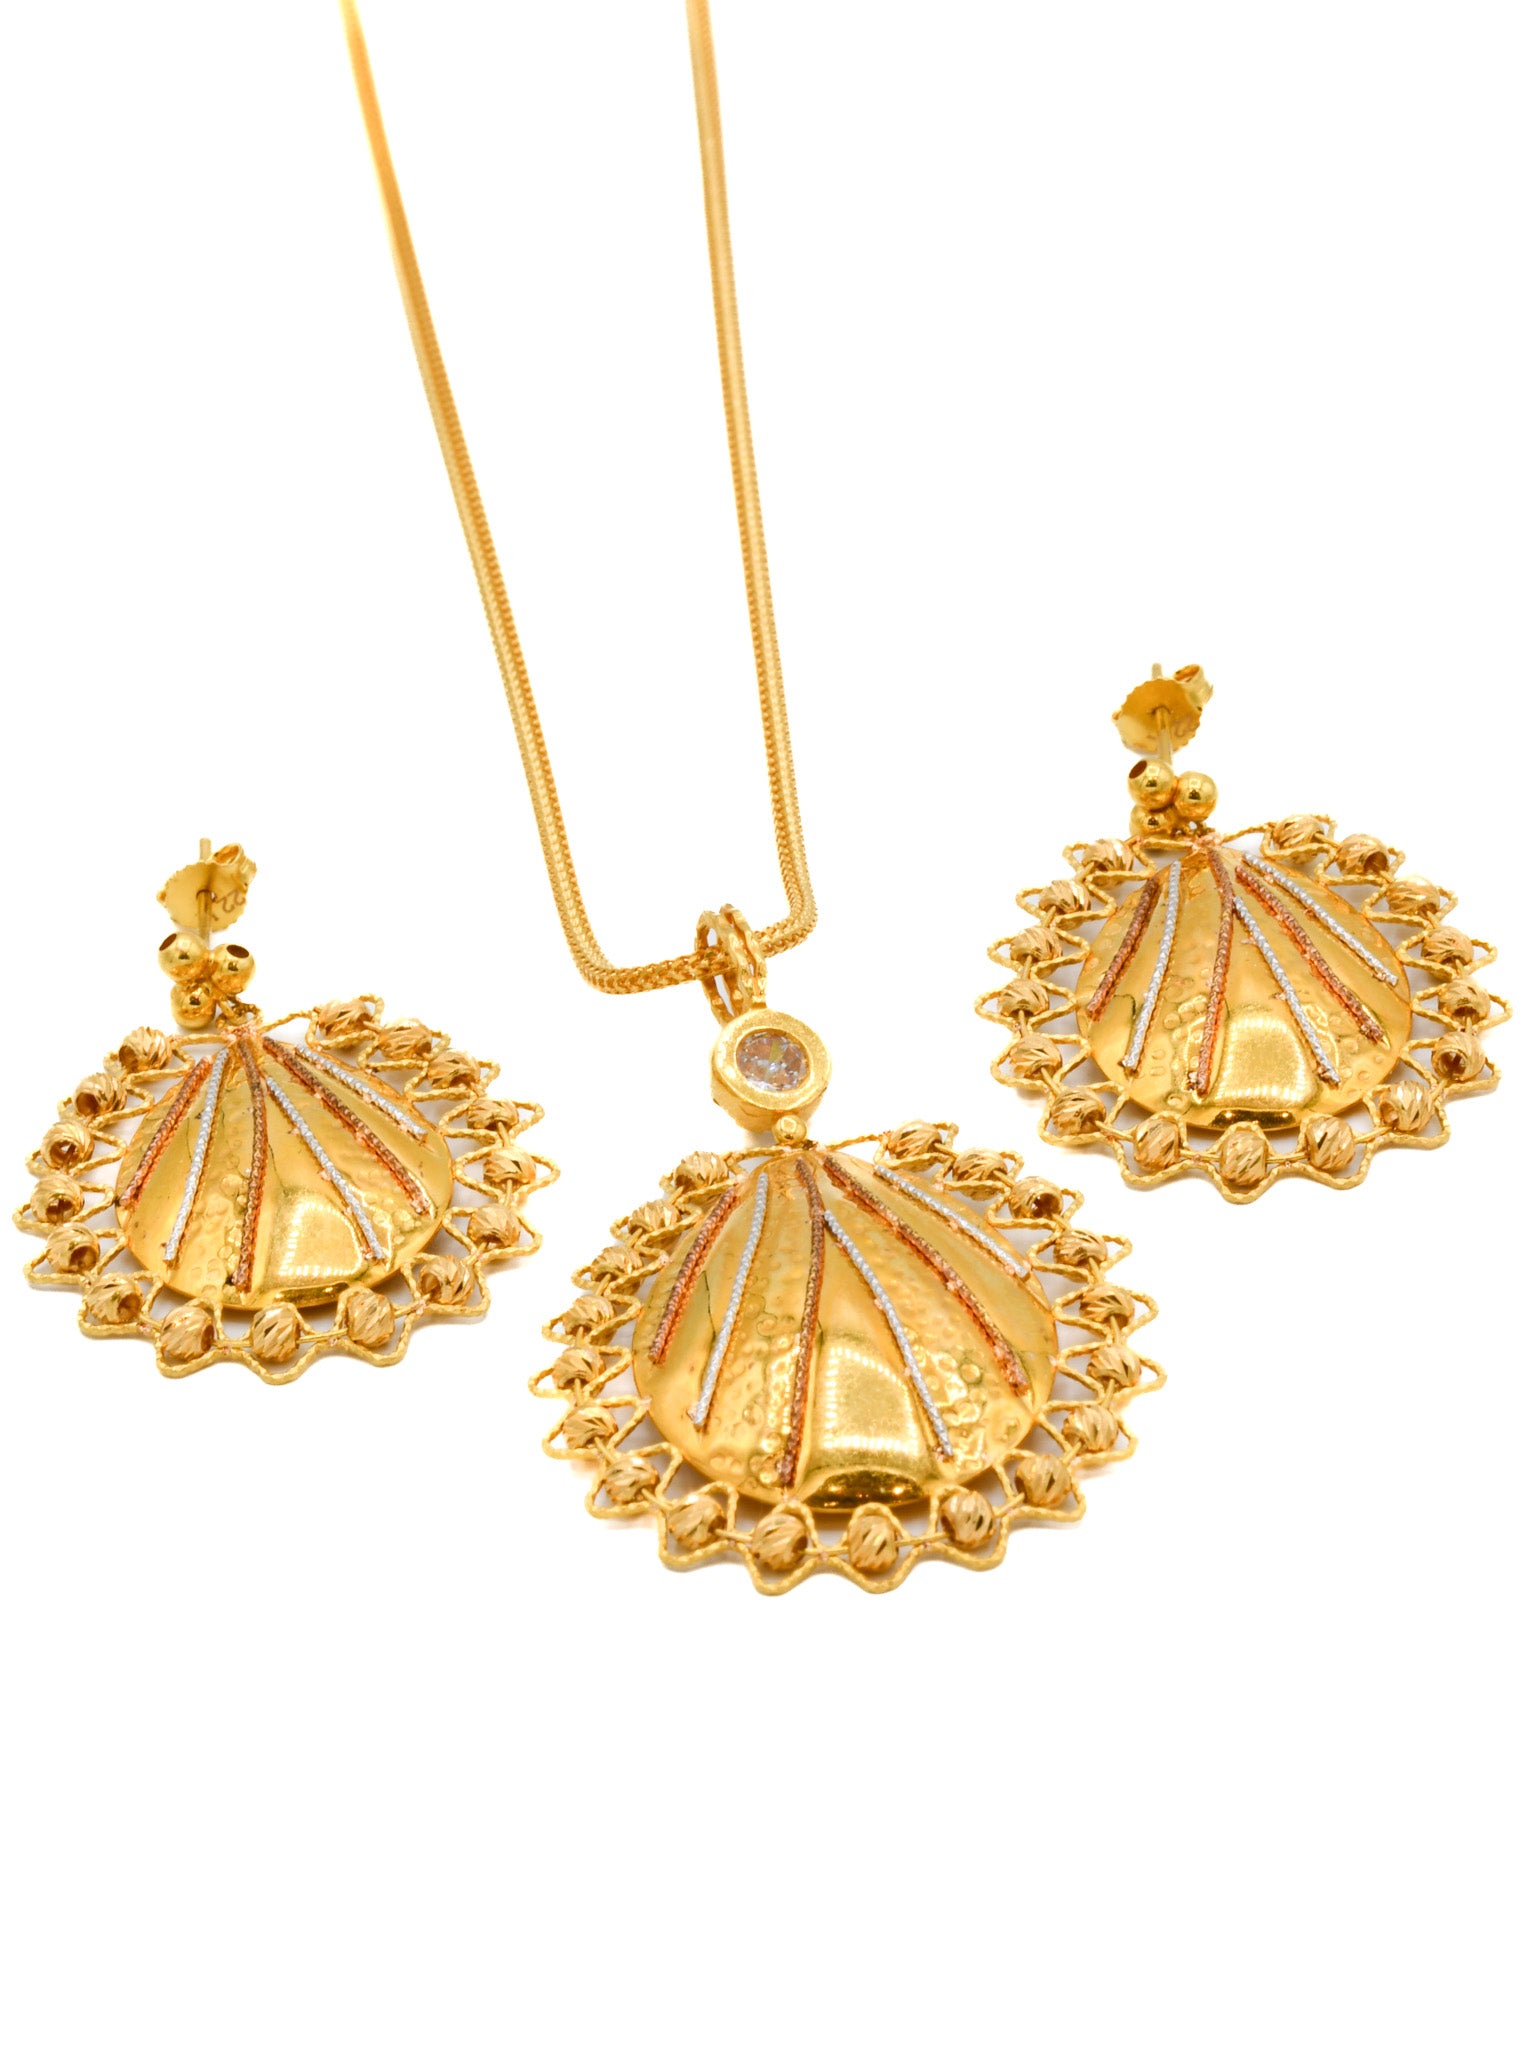 22ct Rose Gold Pendant Earring Set - Roop Darshan